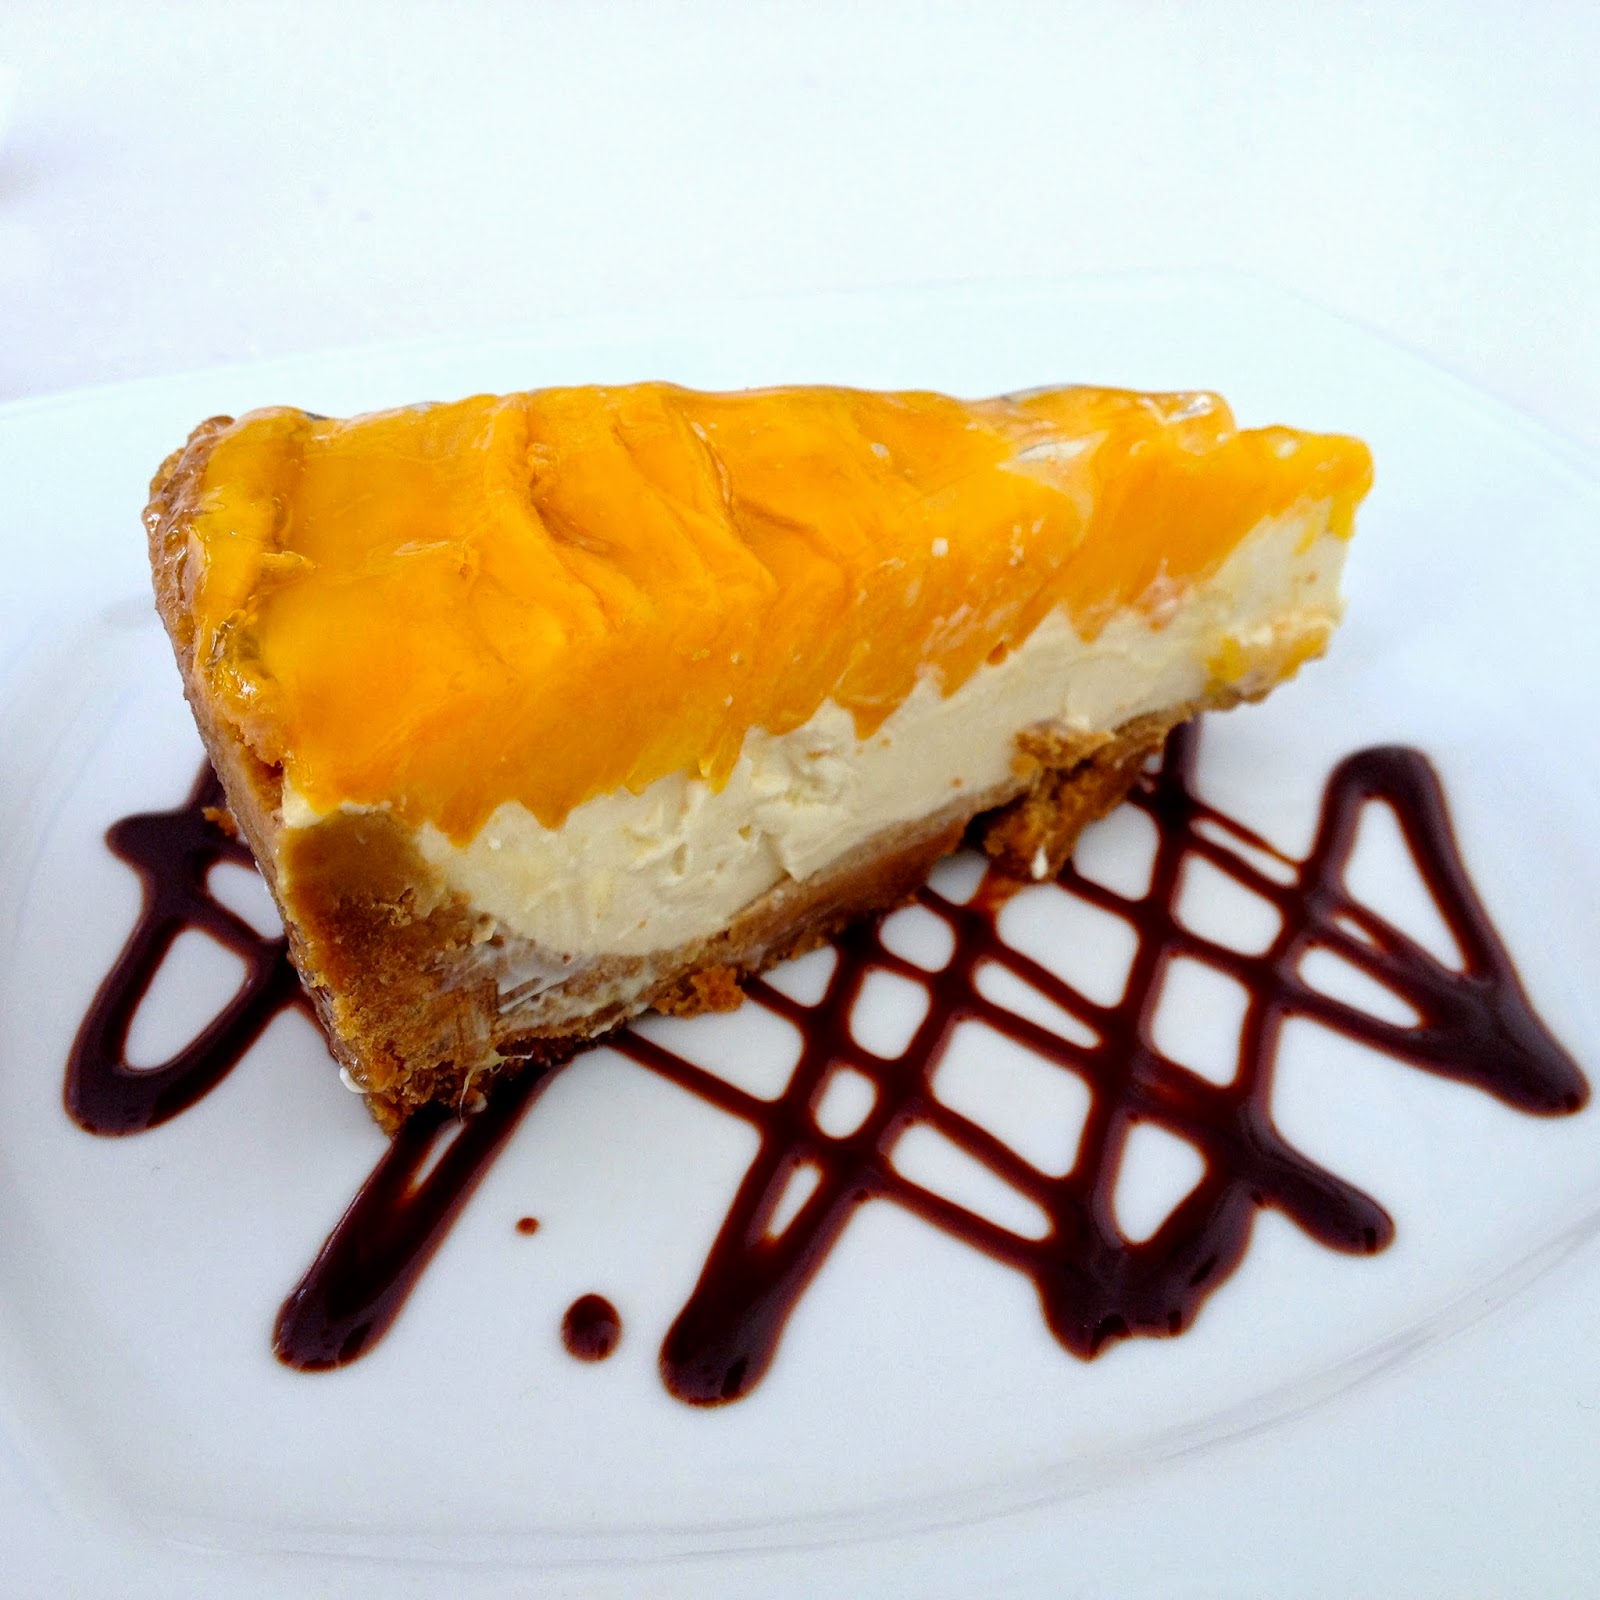 Butterbean Desserts and Cafe 's Mango Cream Pie